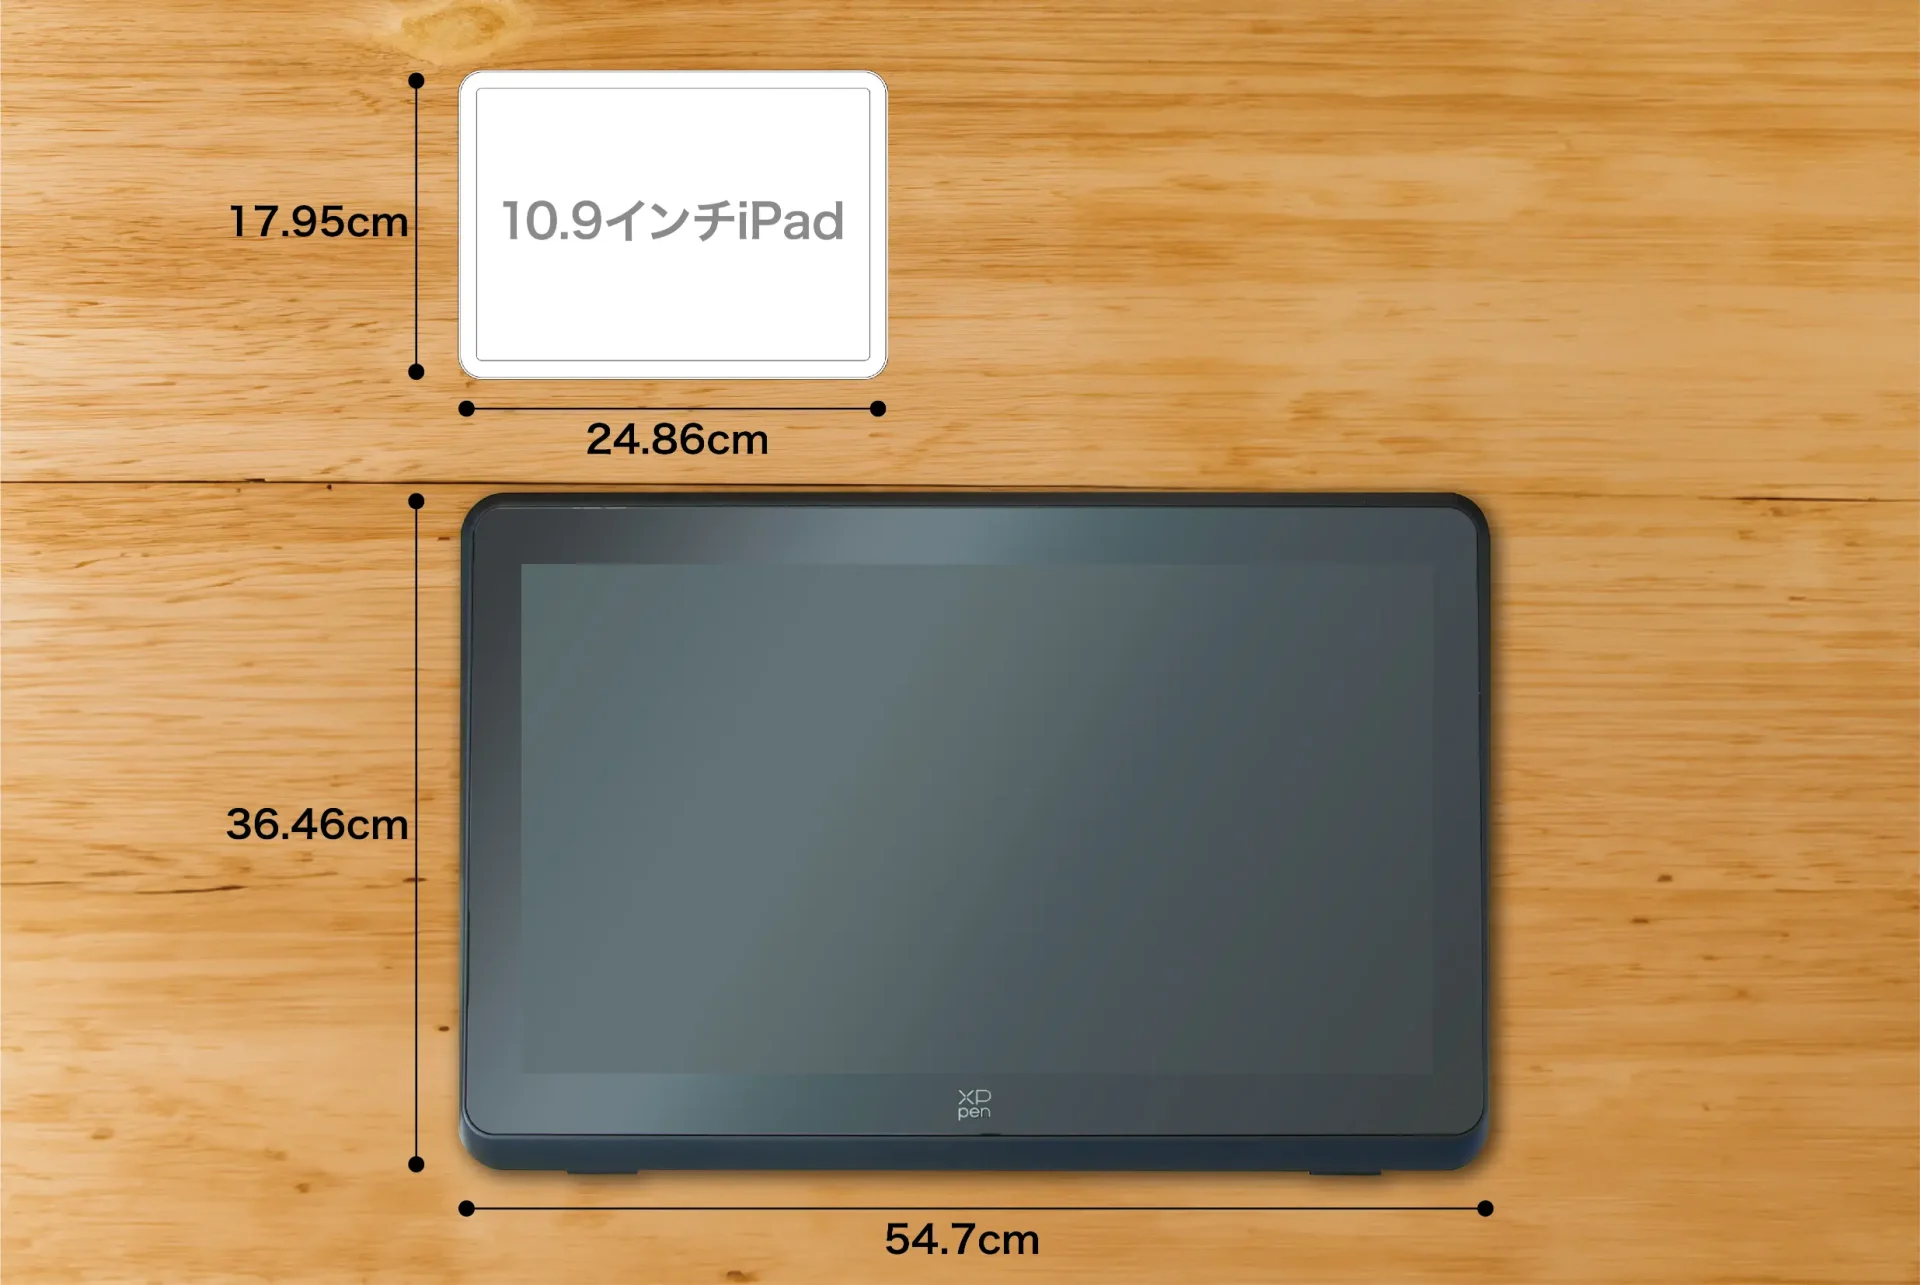 XPPEN Artist22 PlusとiPadとのサイズ比較イメージ